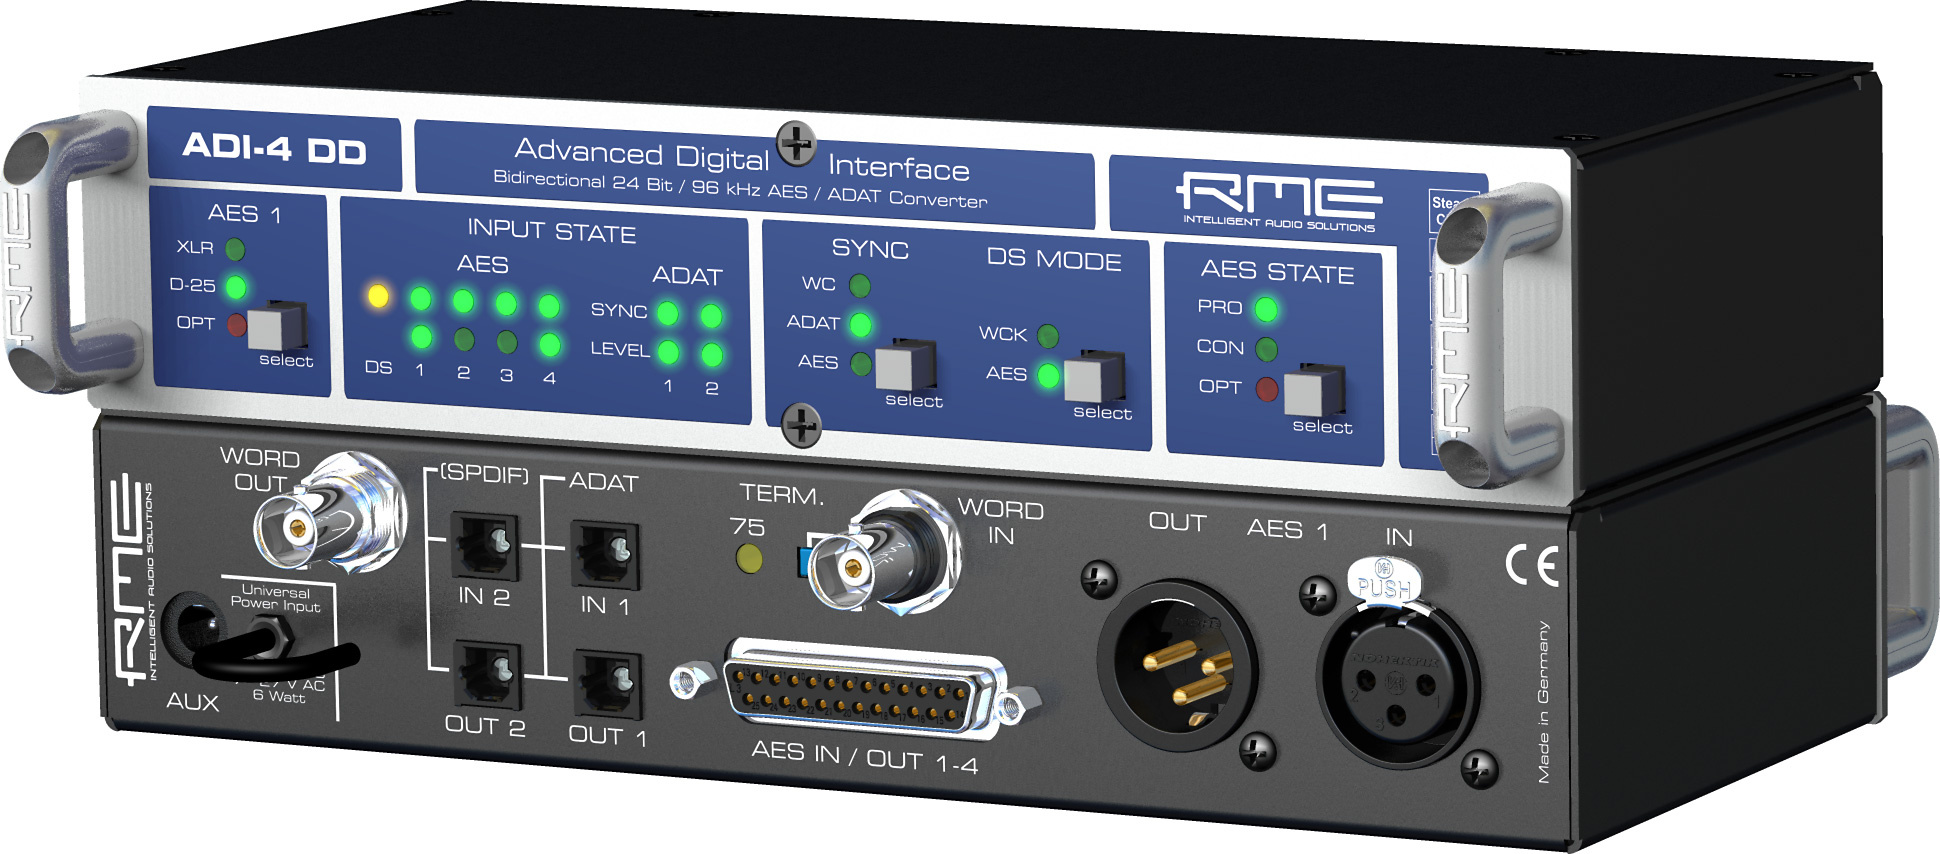 RME ADI-4 DD - 8 Channel, 24 Bit/96kHz Digital Interface and Dual Format Converter